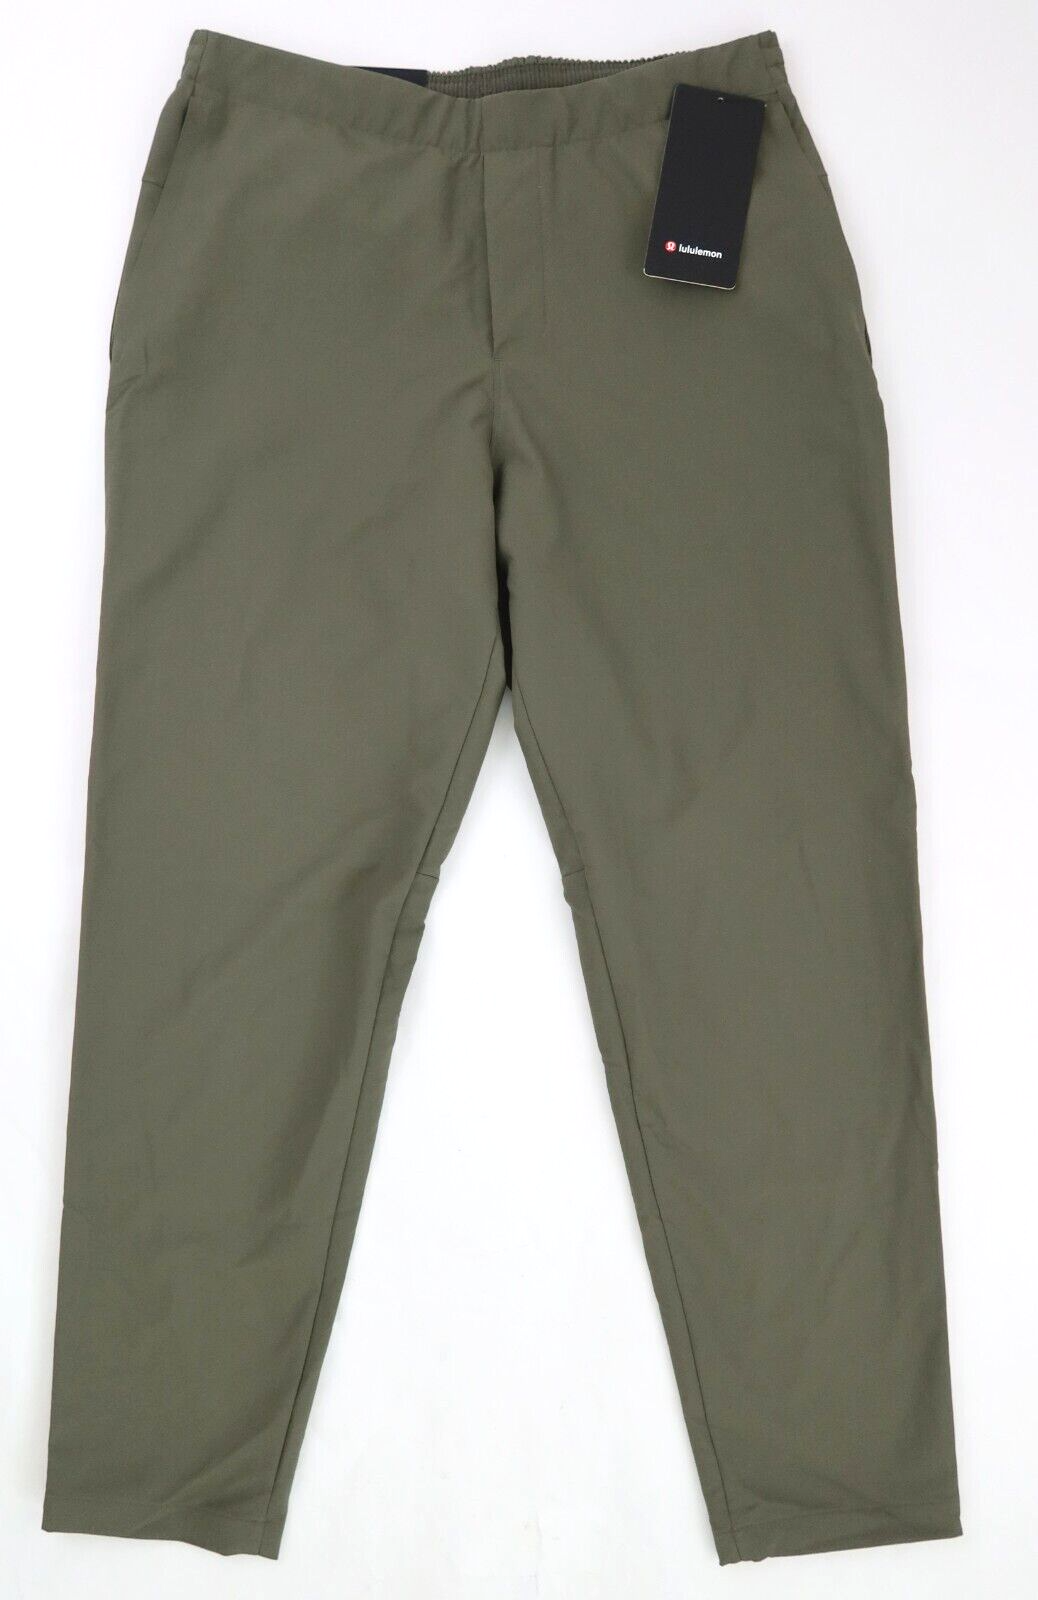 NEW! Lululemon Men's New Venture Trouser *Pique Fabric Olive Green LARGE  $148.00